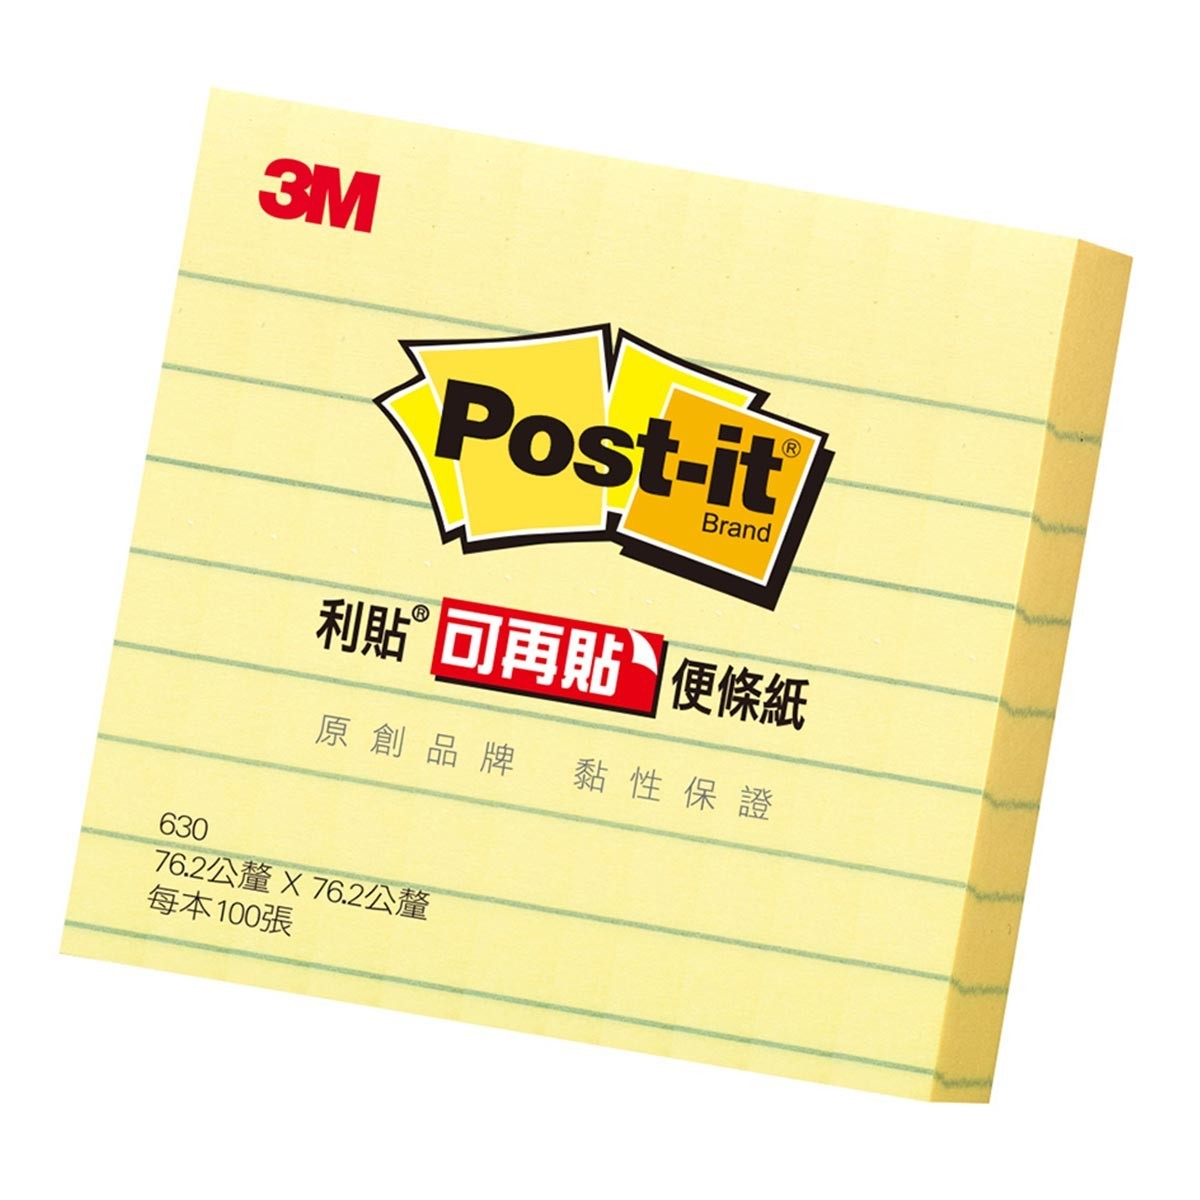 3M Post-it 可再貼橫格便條紙黃色 76.2公釐 X 76.2公釐 X 24本 630